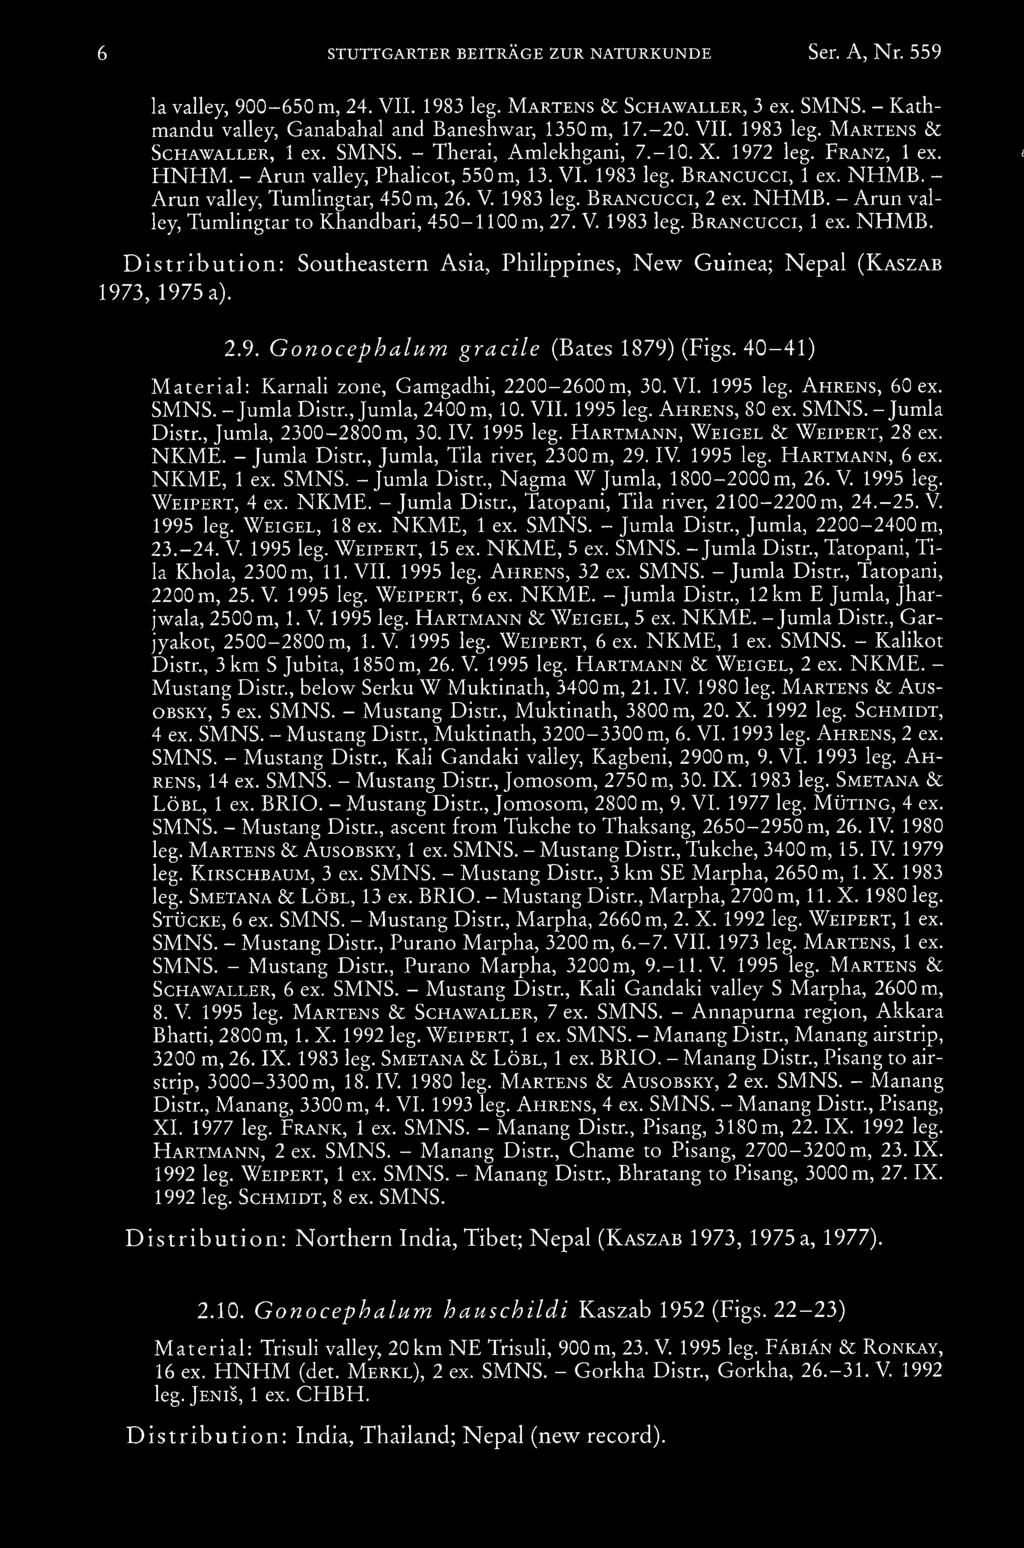 NHMB. - Arun valley, Tumlingtar to Khandbari, 450-1100 m, 27. V 1983 leg. Brancucci, 1 ex. NHMB. Distribution: Southeastern Asia, Philippines, New Guinea; Nepal (Kaszab 1973,1975 a). 2.9. Gonocephalum gracile (Bates 1879) (Figs.